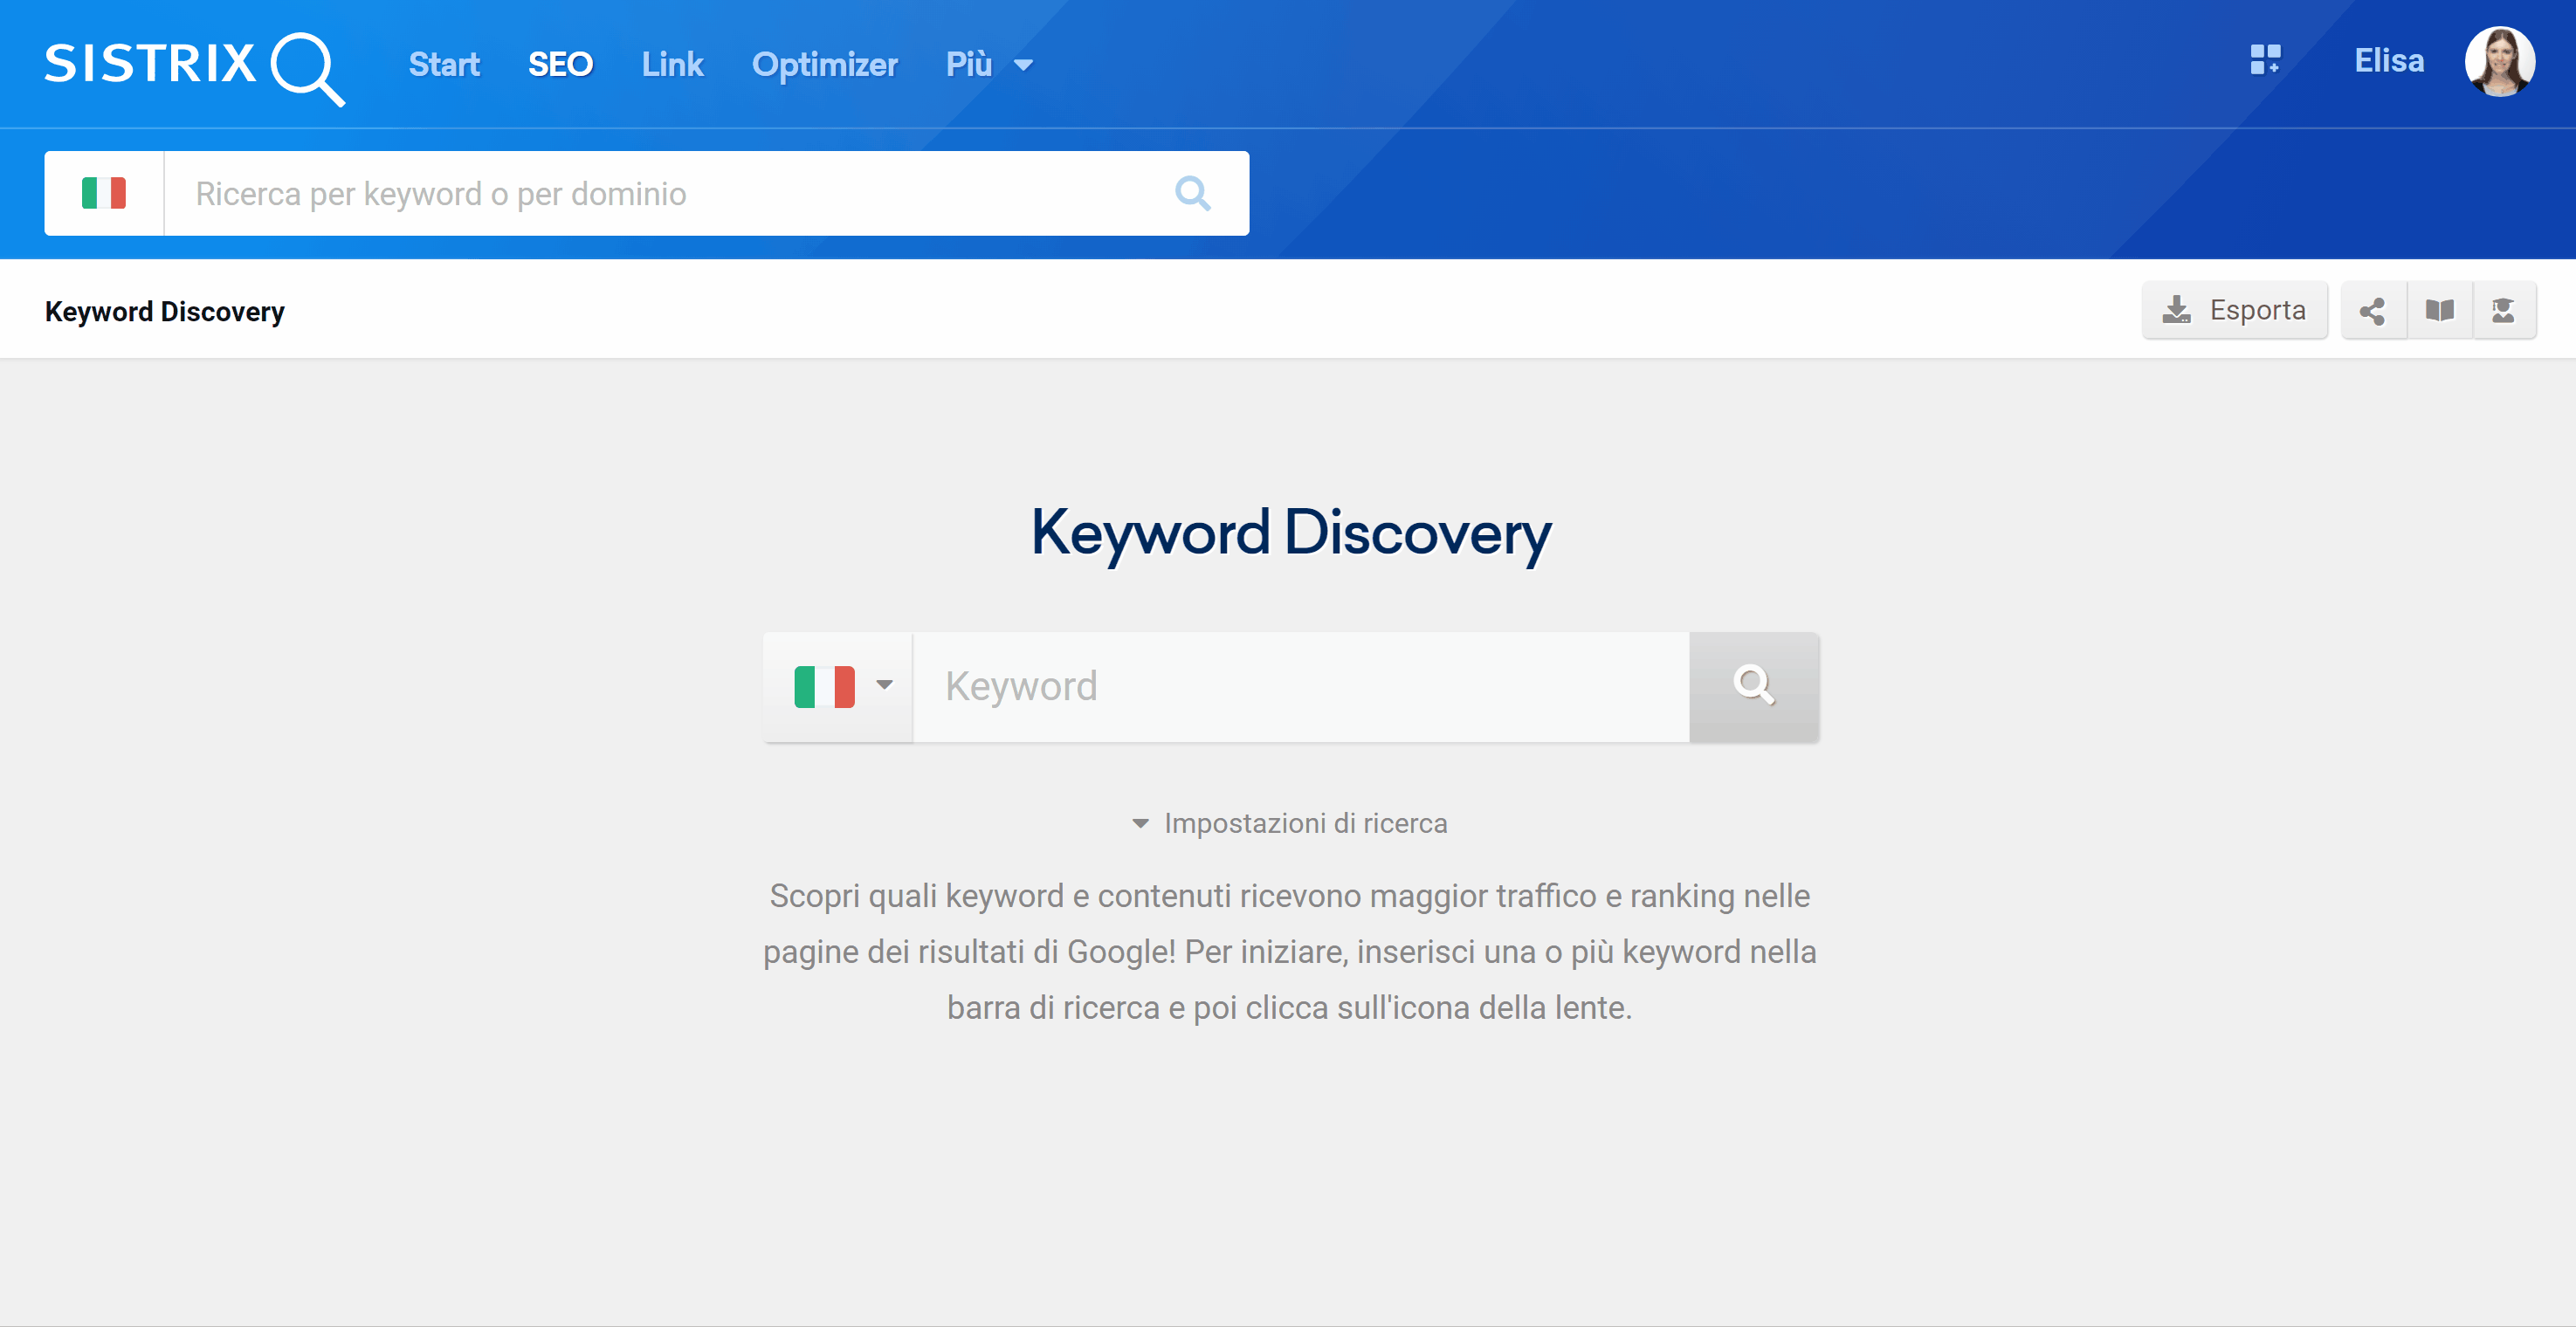 Lingue disponibili nel tool Keyword Discovery